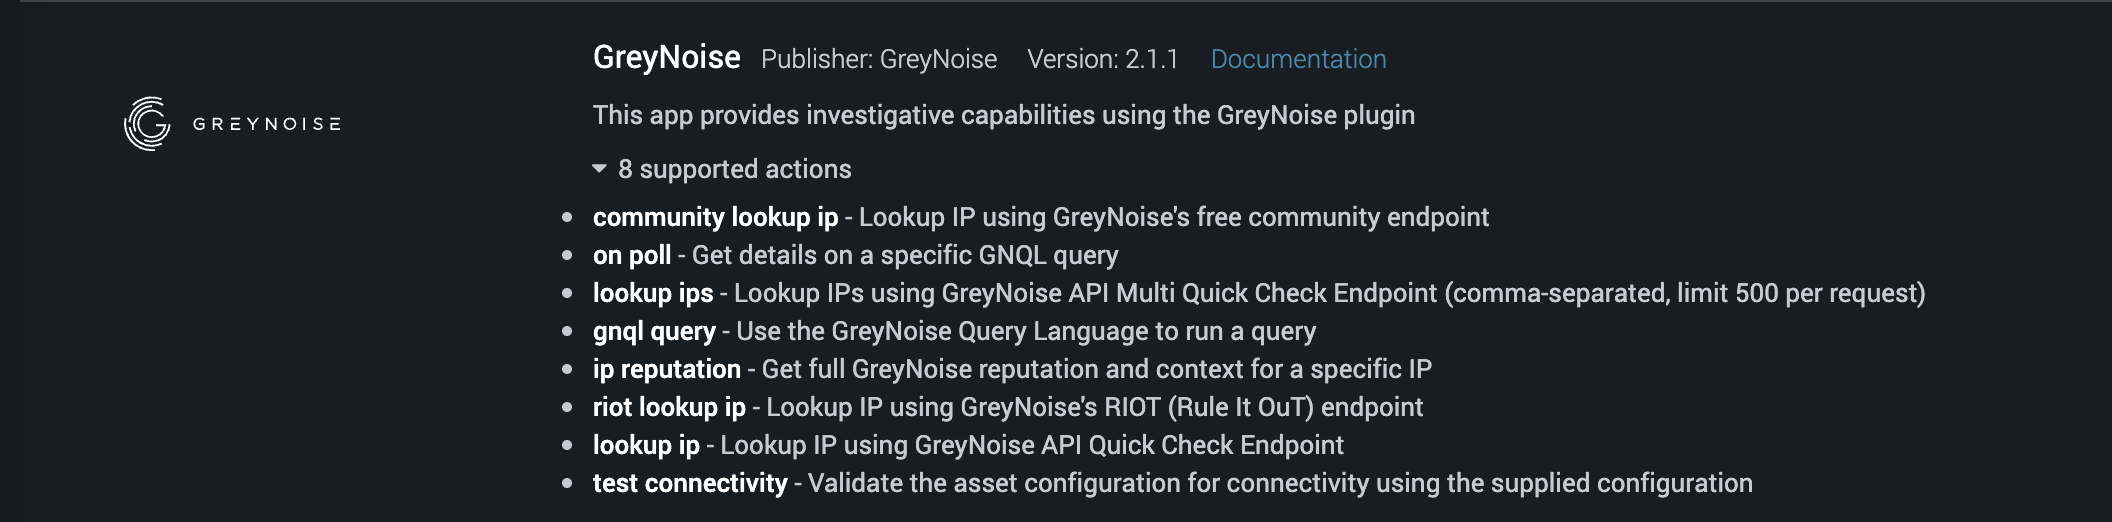 GreyNoise App details